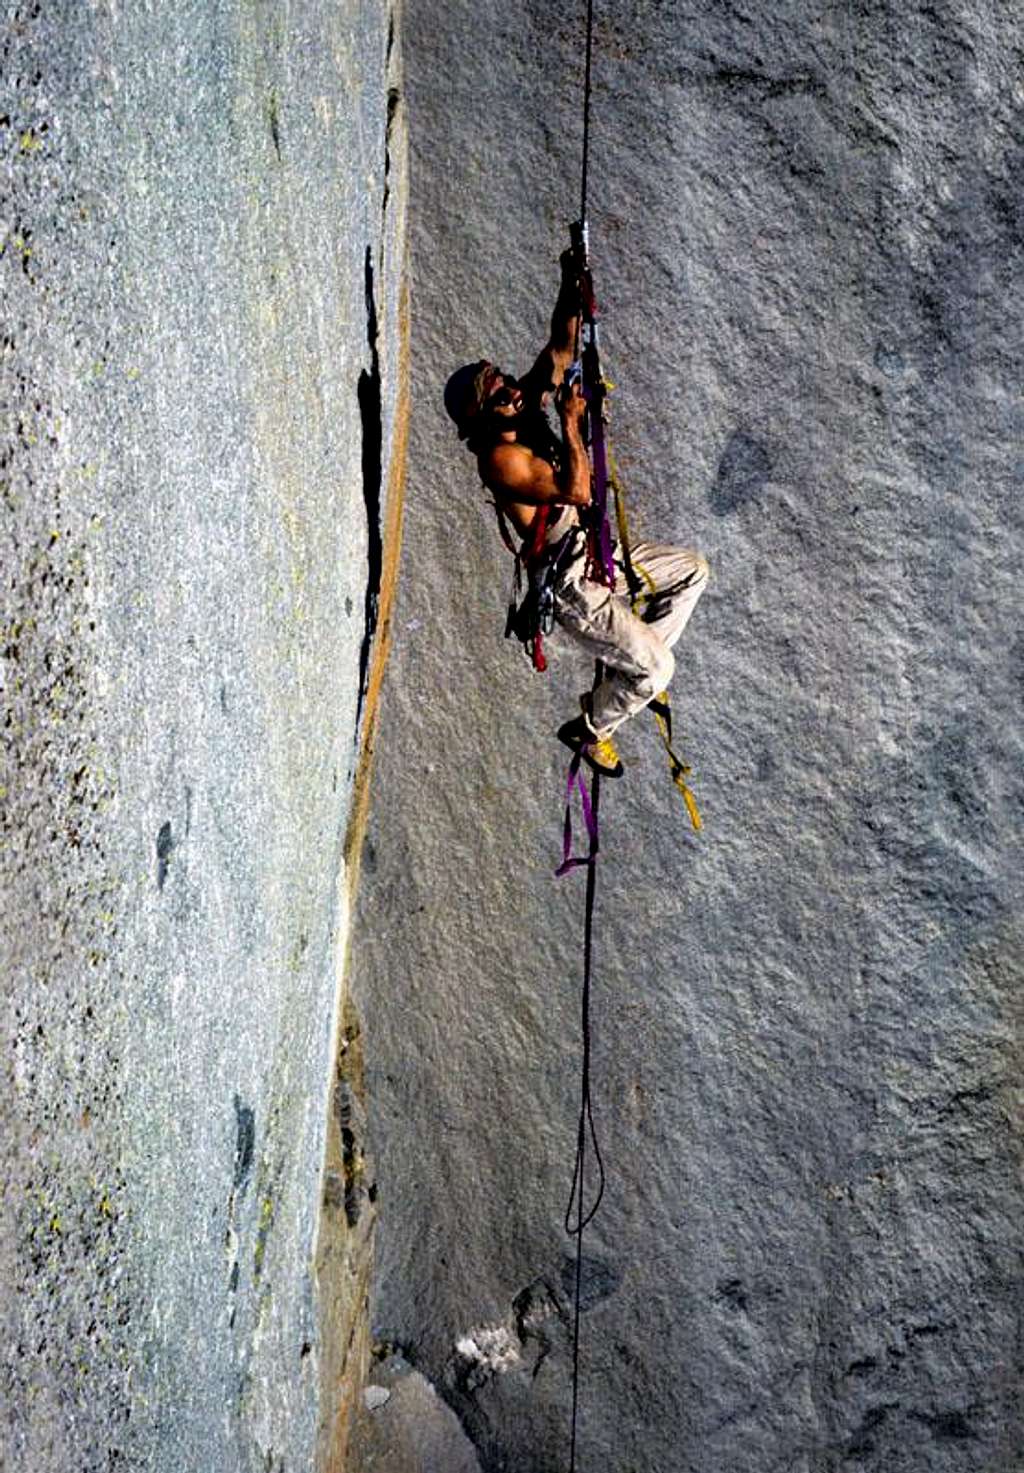 Carroll Holthaus jugging Ropes, Yosemite